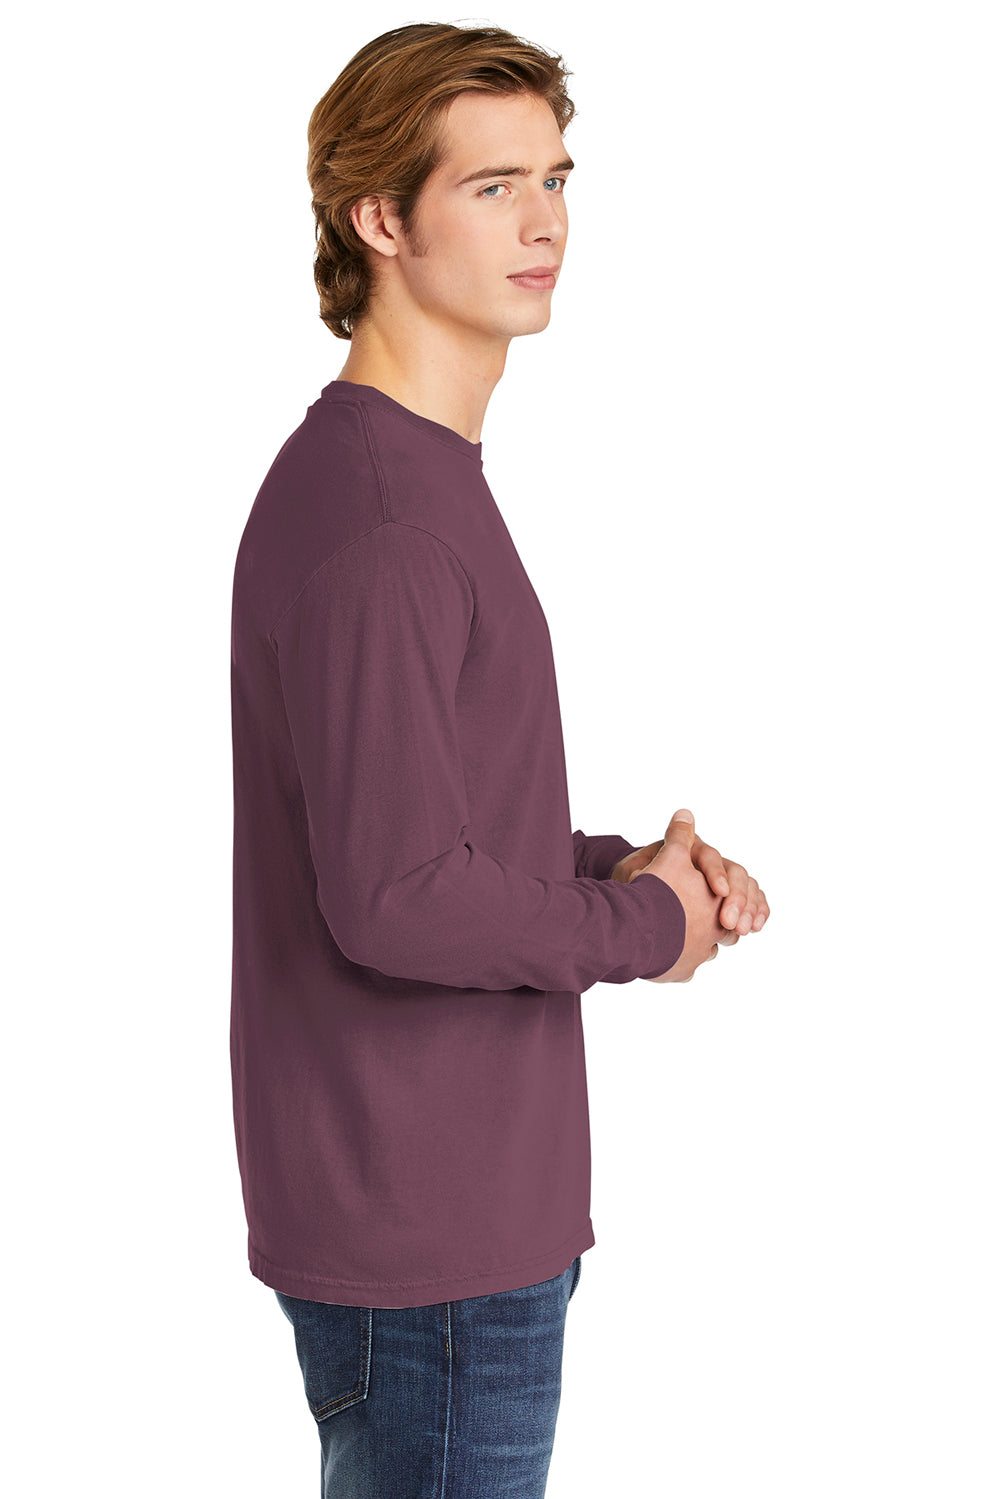 Comfort Colors 6014/C6014 Mens Long Sleeve Crewneck T-Shirt Berry Side